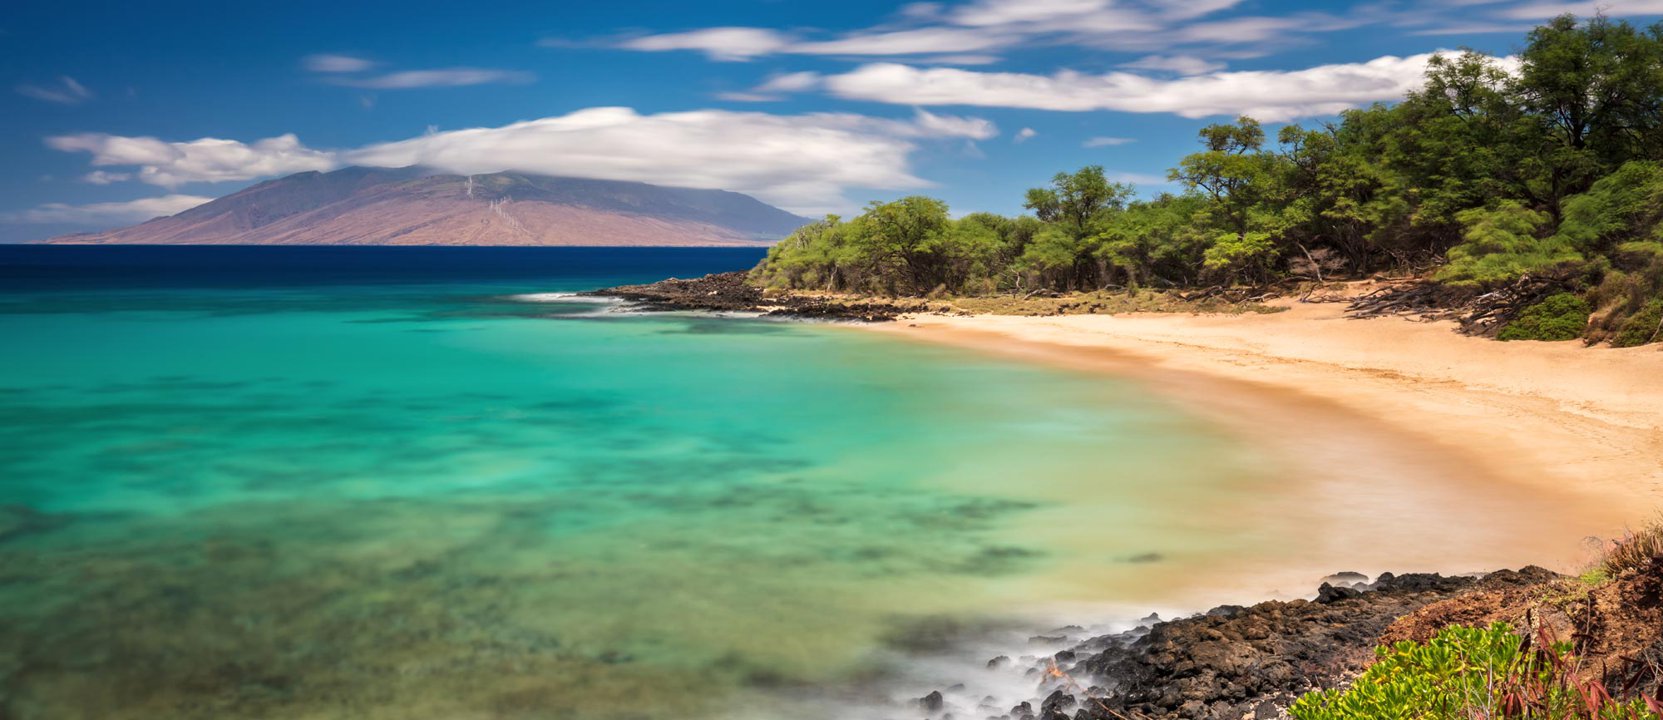 Maui Real Estate for Sale